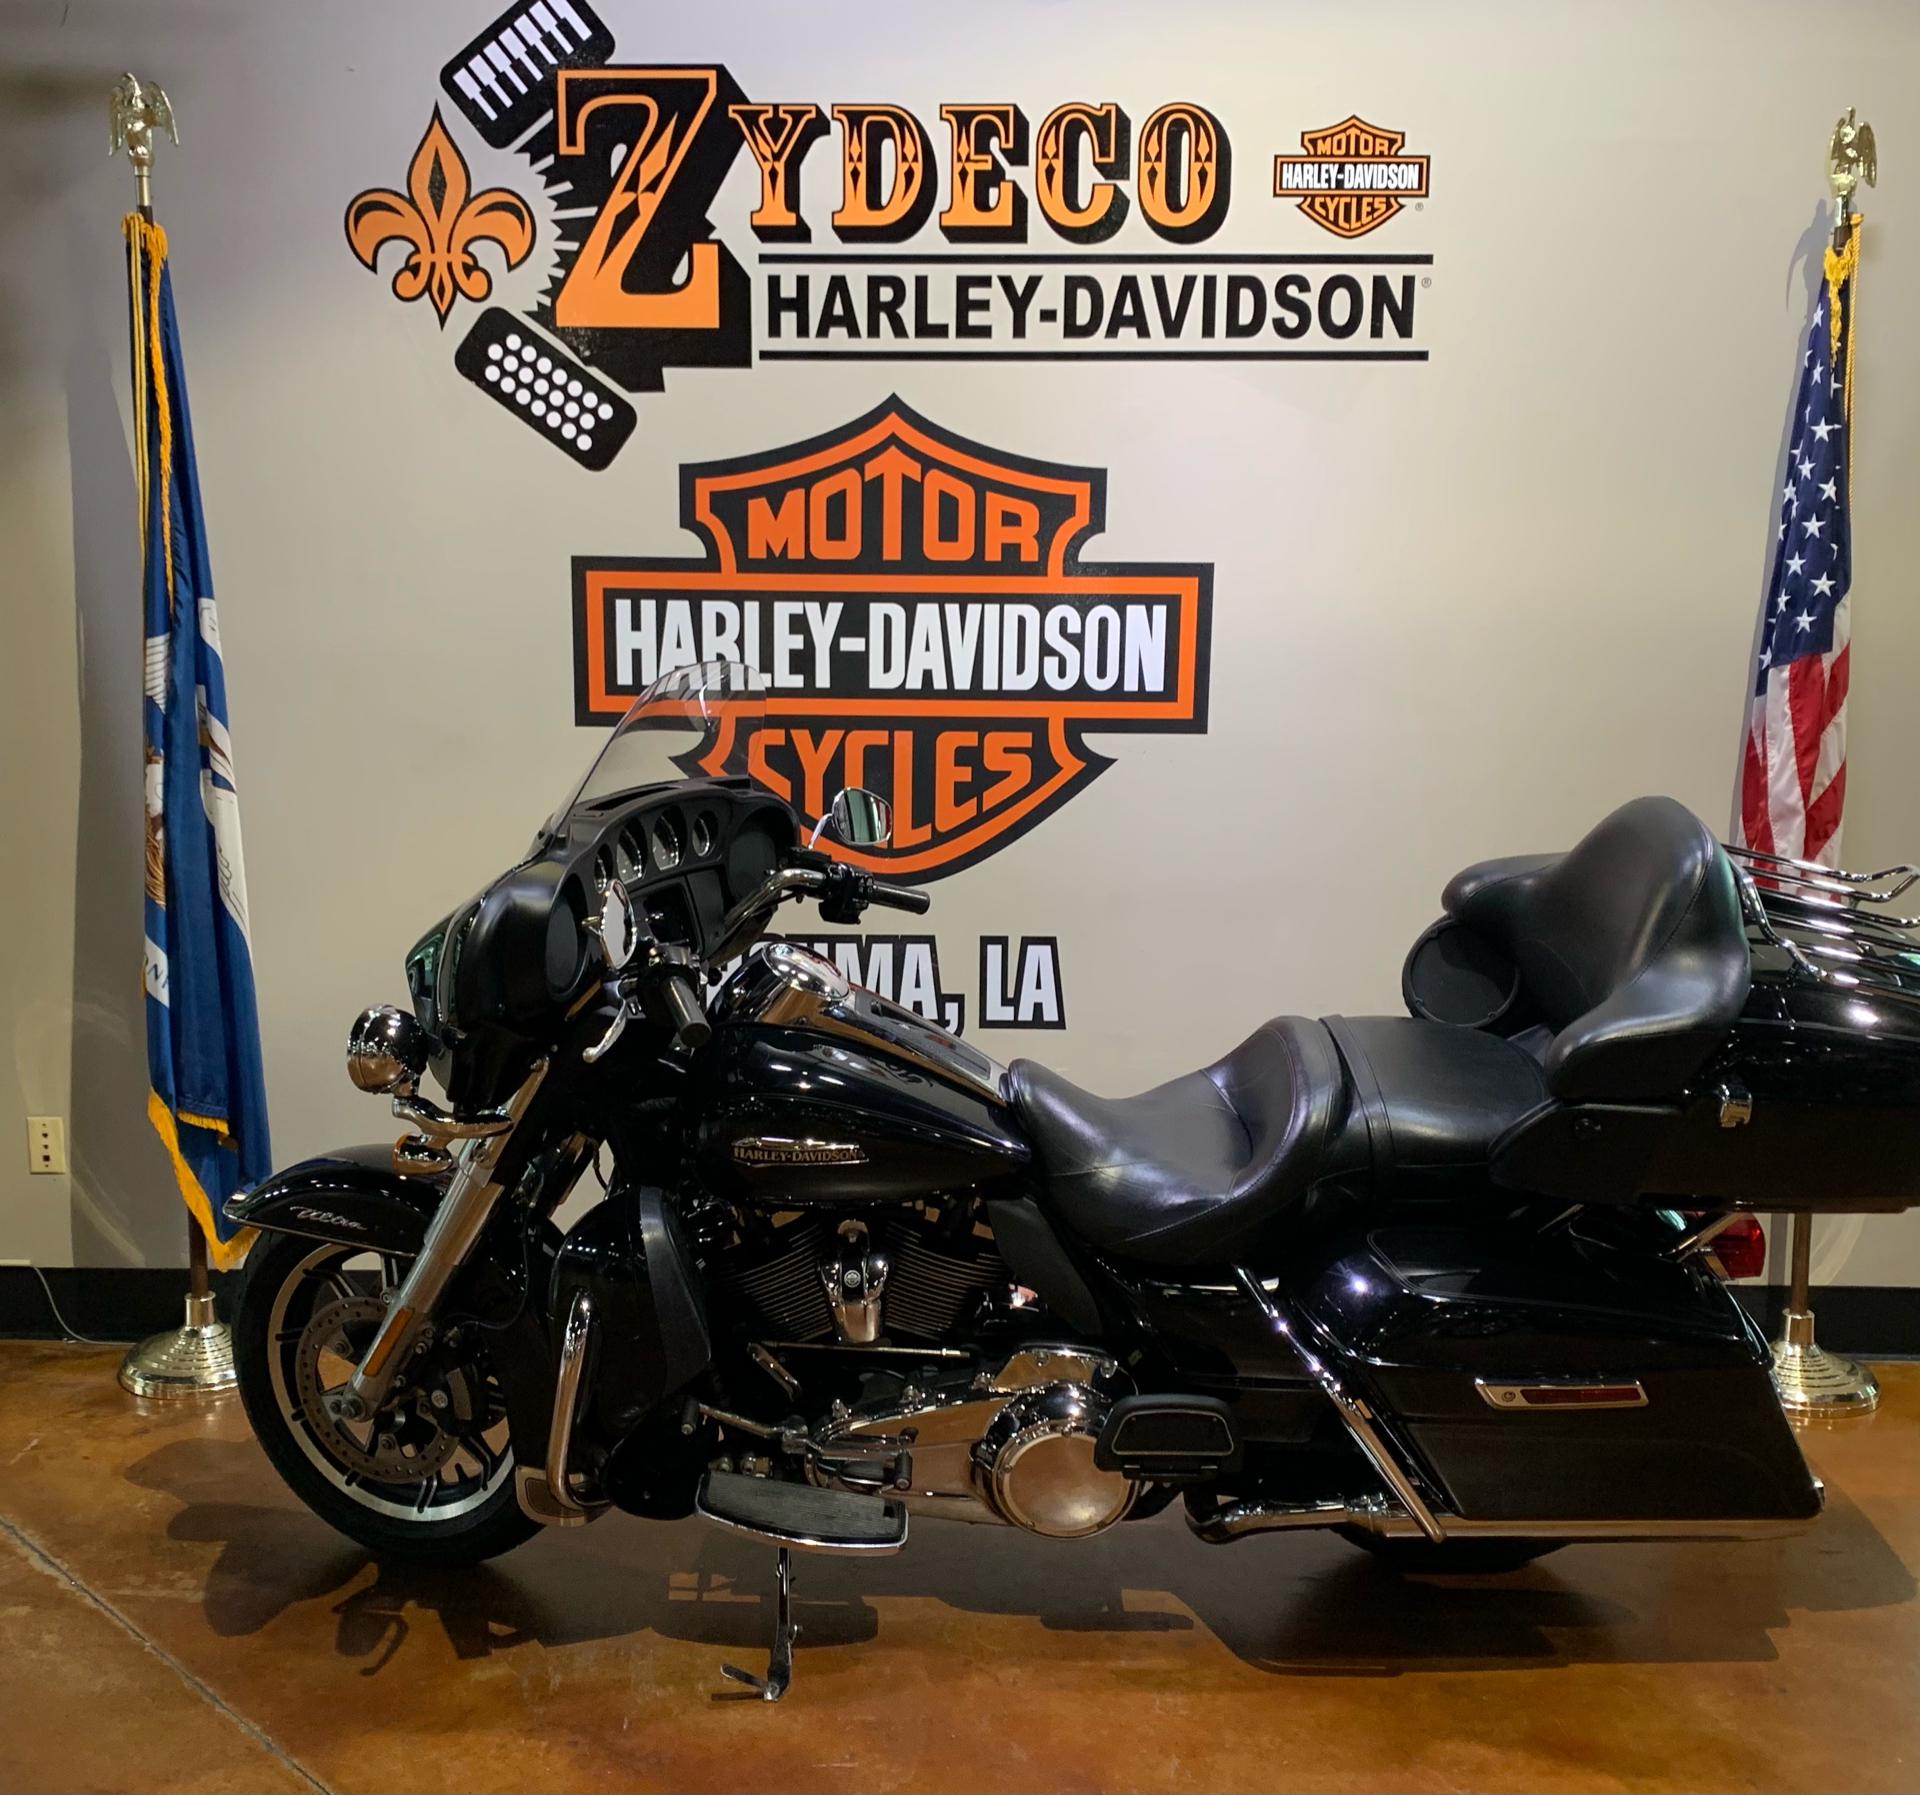 2019 Harley-Davidson Electra Glide near me - Photo 7